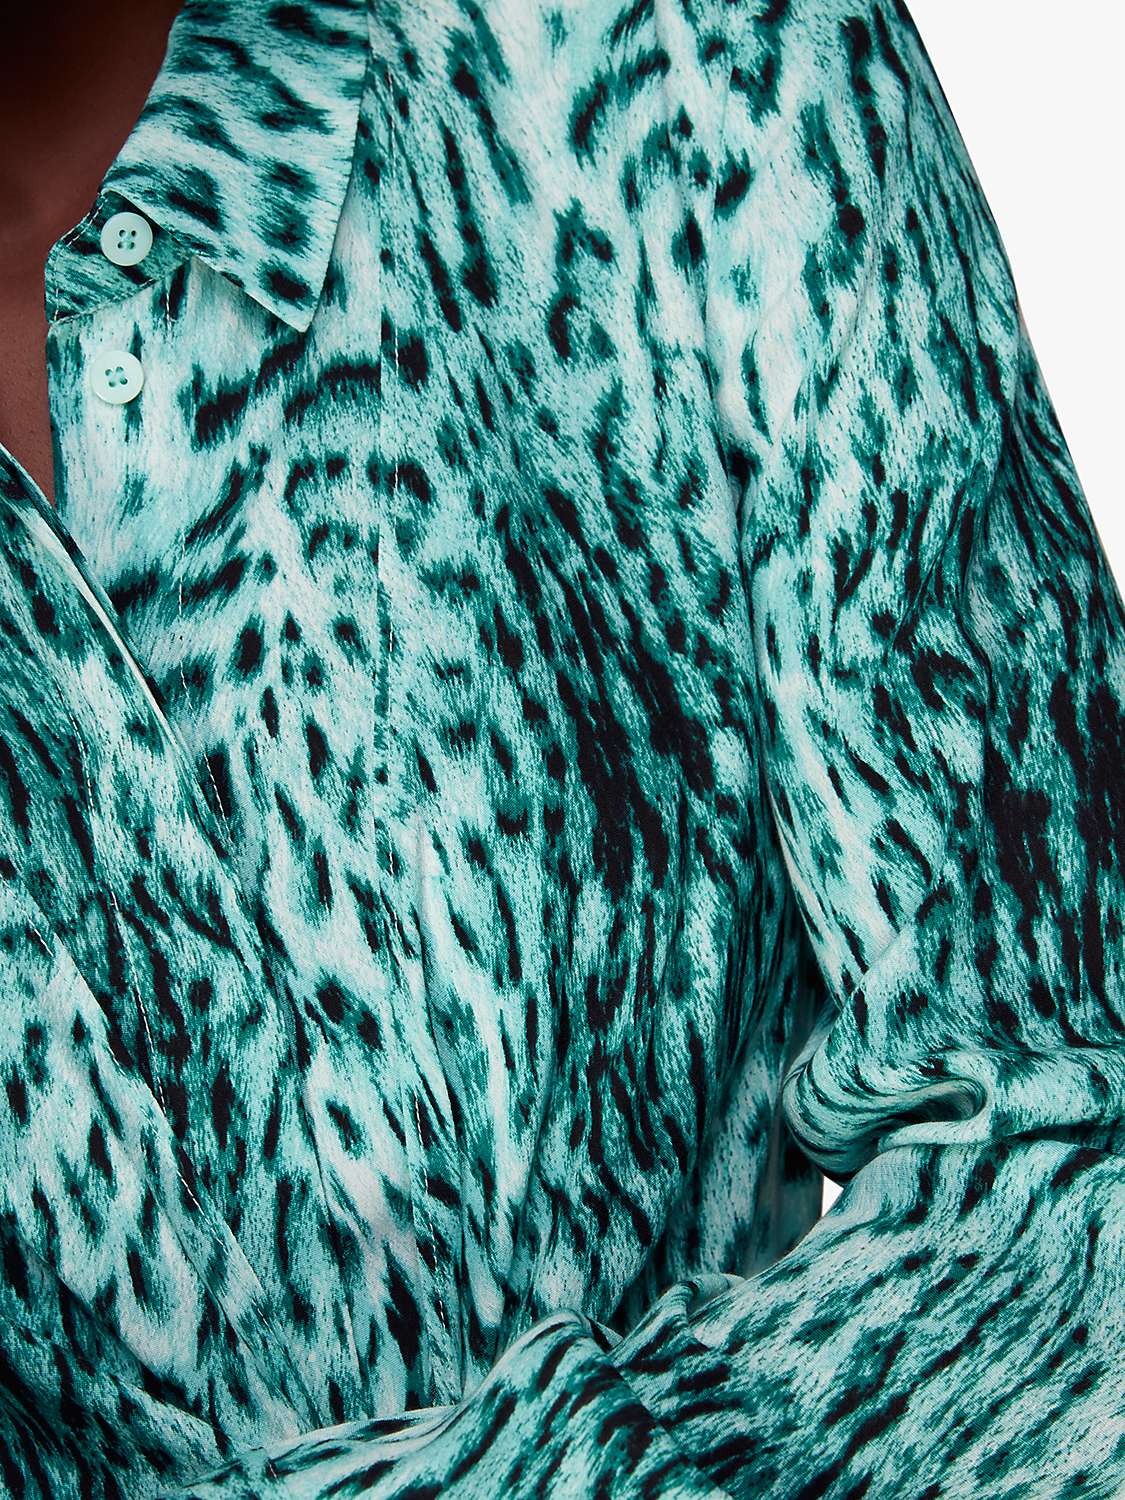 Buy Whistles Brushed Leopard Tie Midi Dress, Green/Multi Online at johnlewis.com